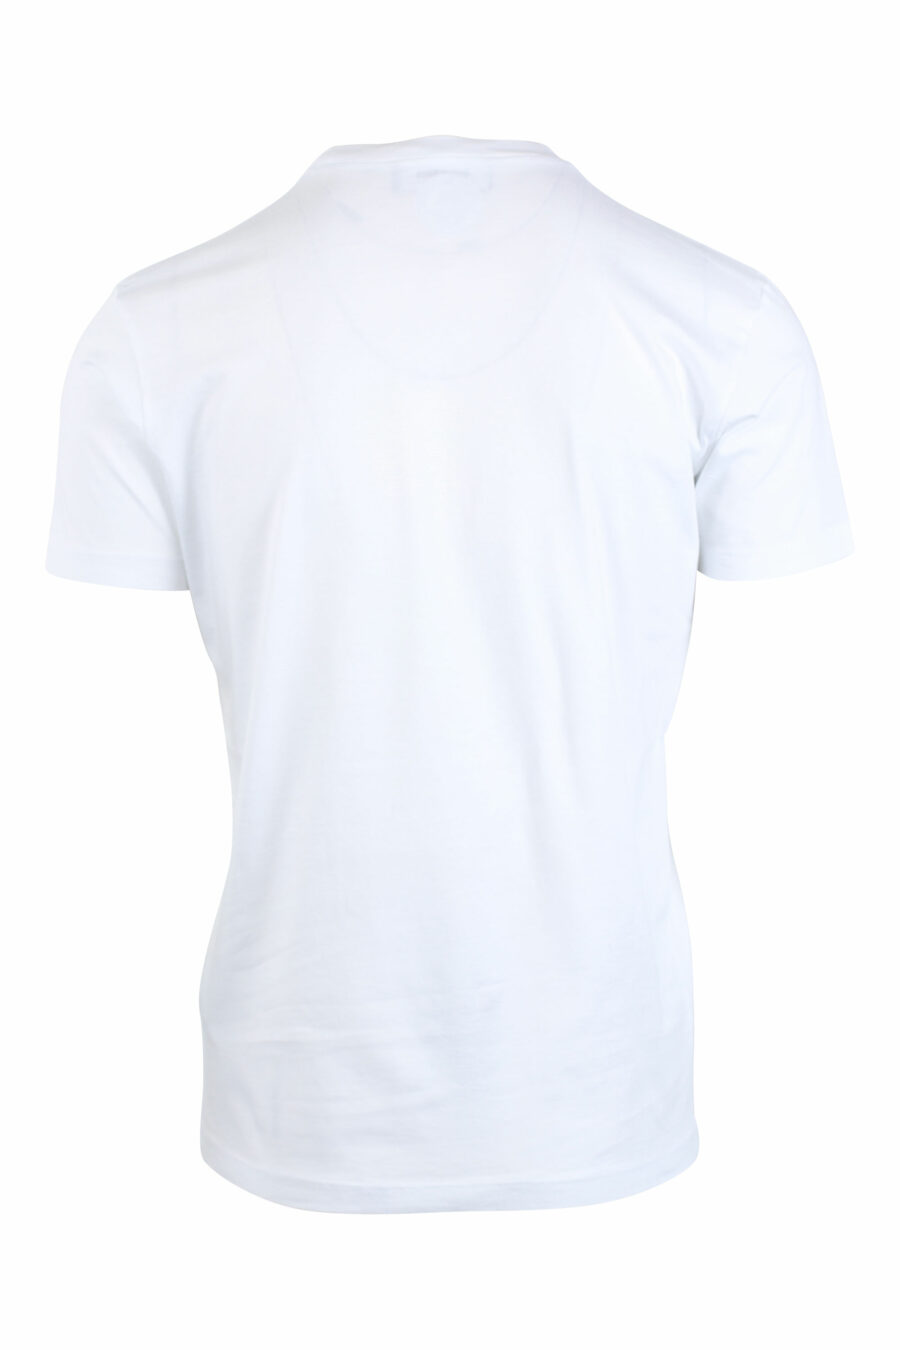 Camiseta blanca con logo hoja verde feliz - IMG 2630